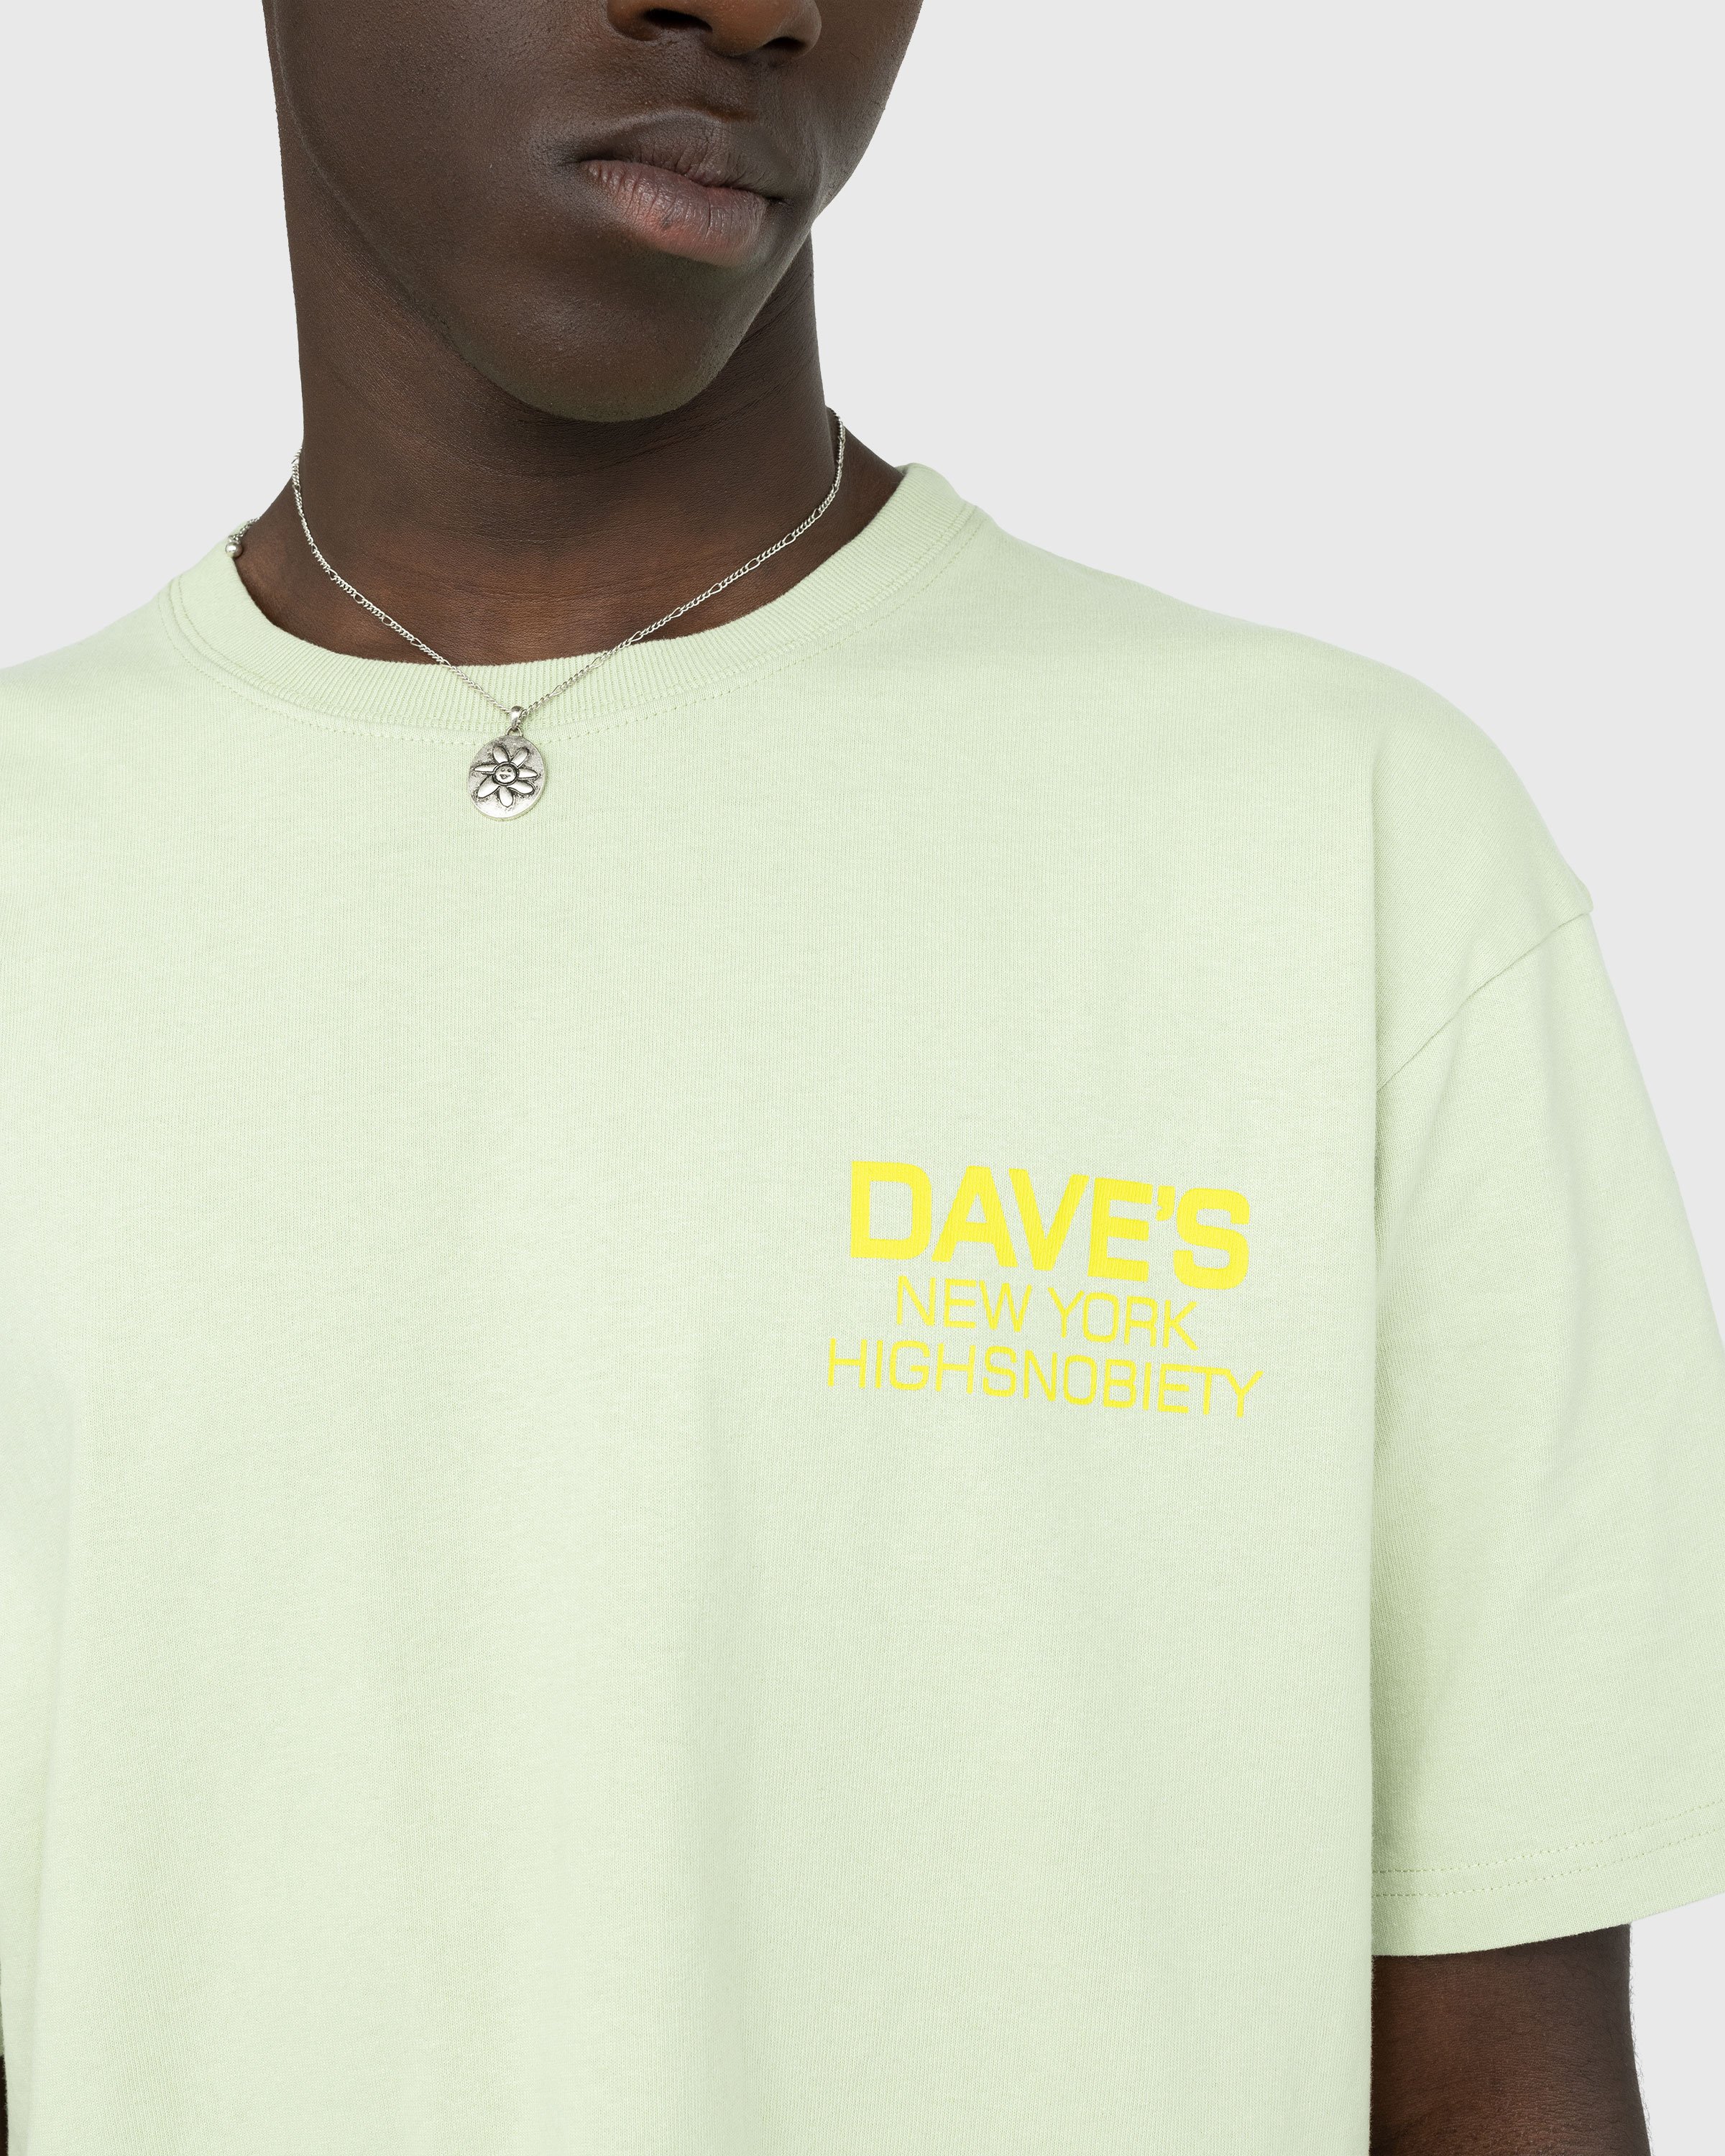 Dave's New York x Highsnobiety - Sage T-Shirt - Clothing - Green - Image 5